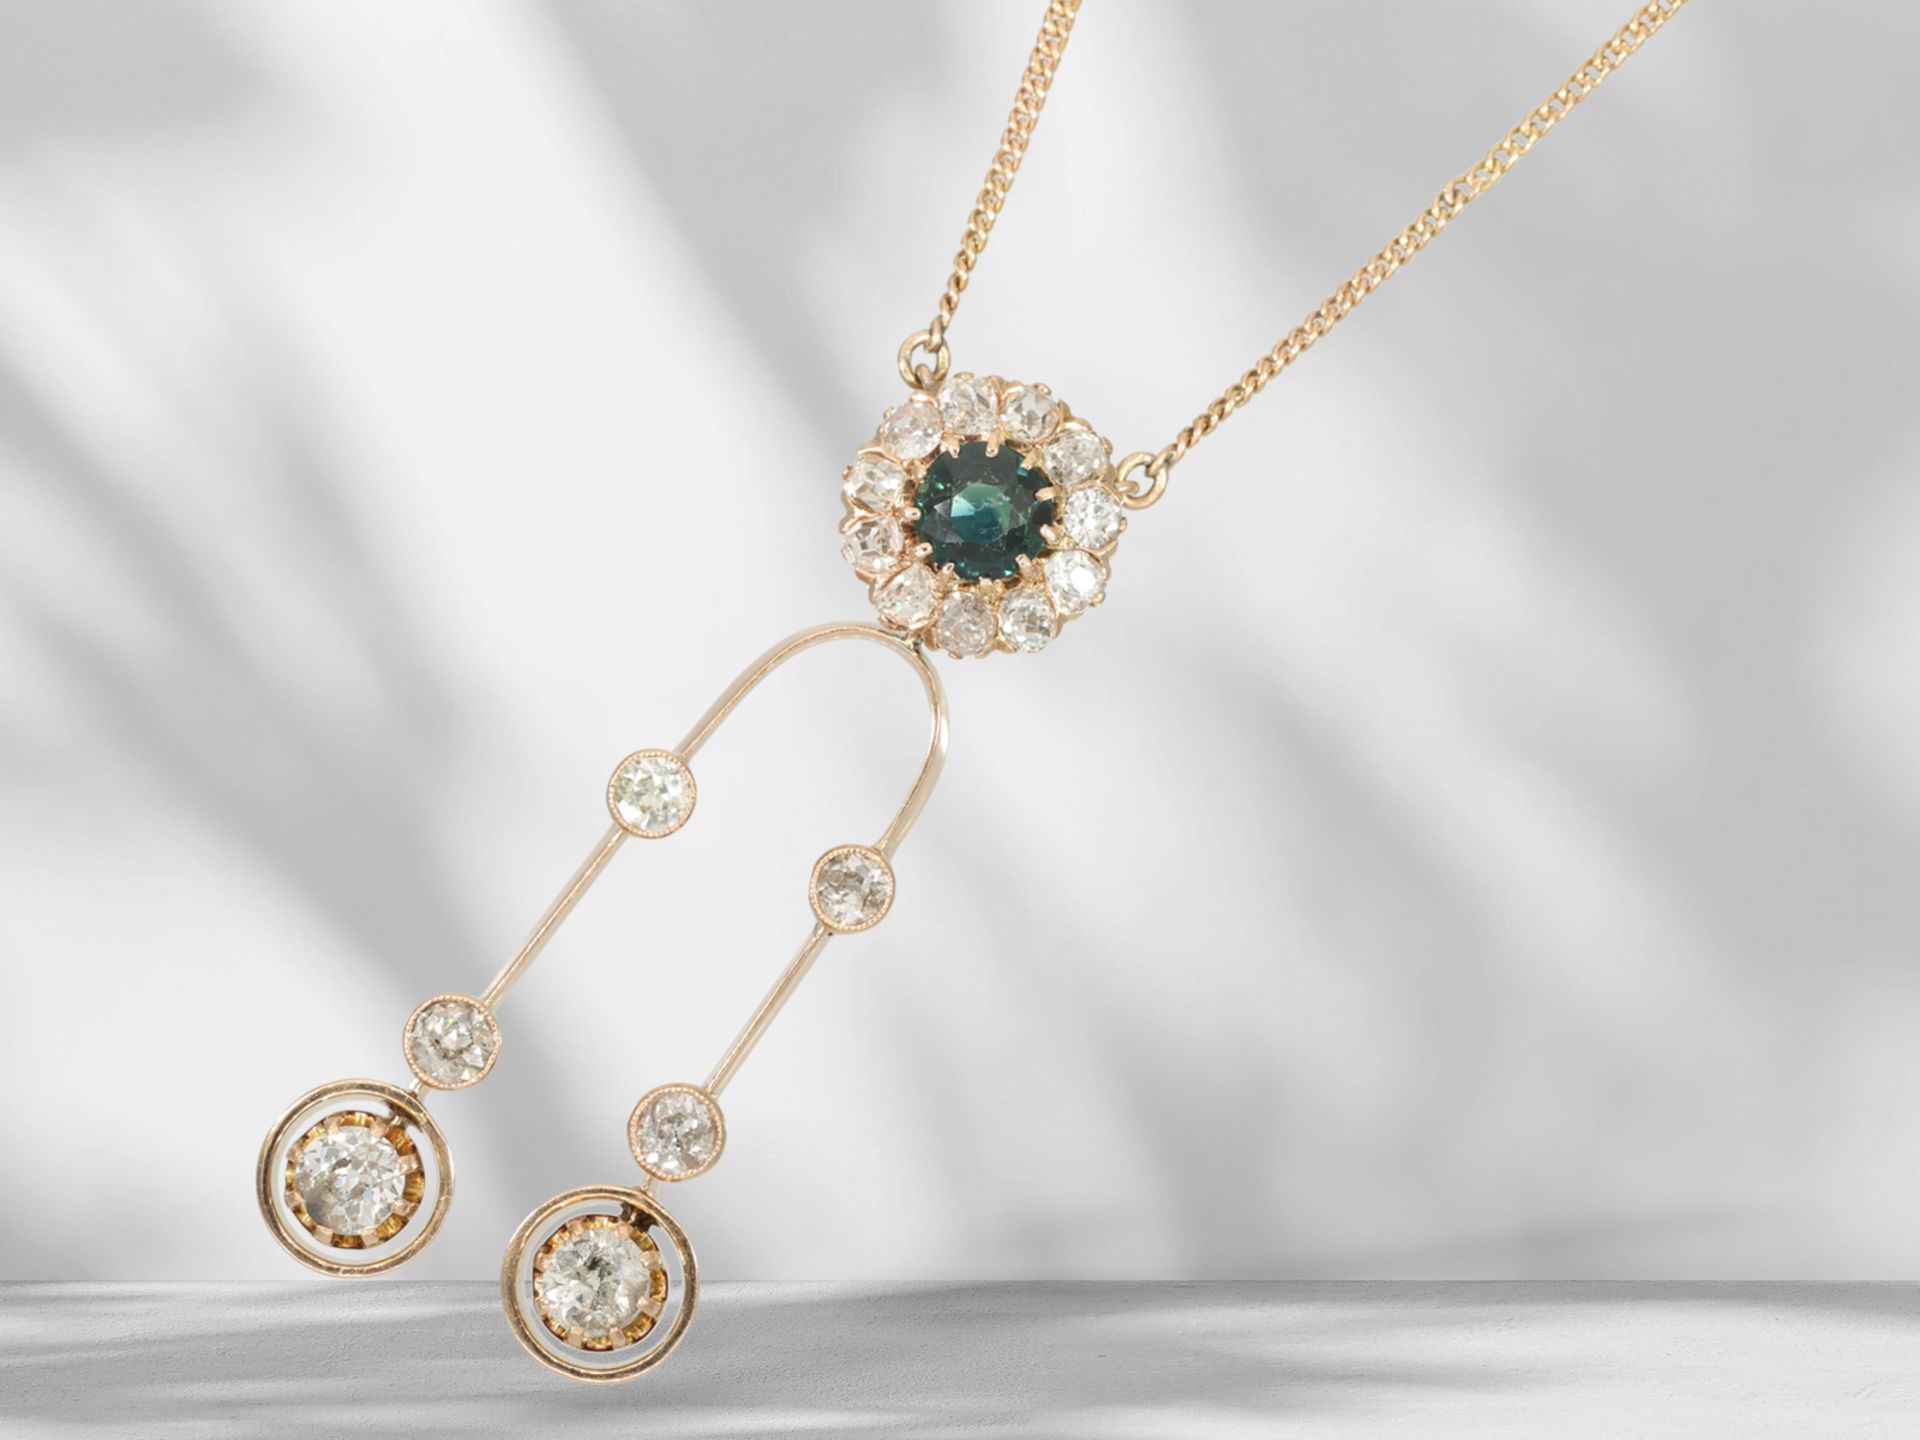 Chain/necklace: fine antique spinel/diamond centrepiece necklace, approx. 2.35ct